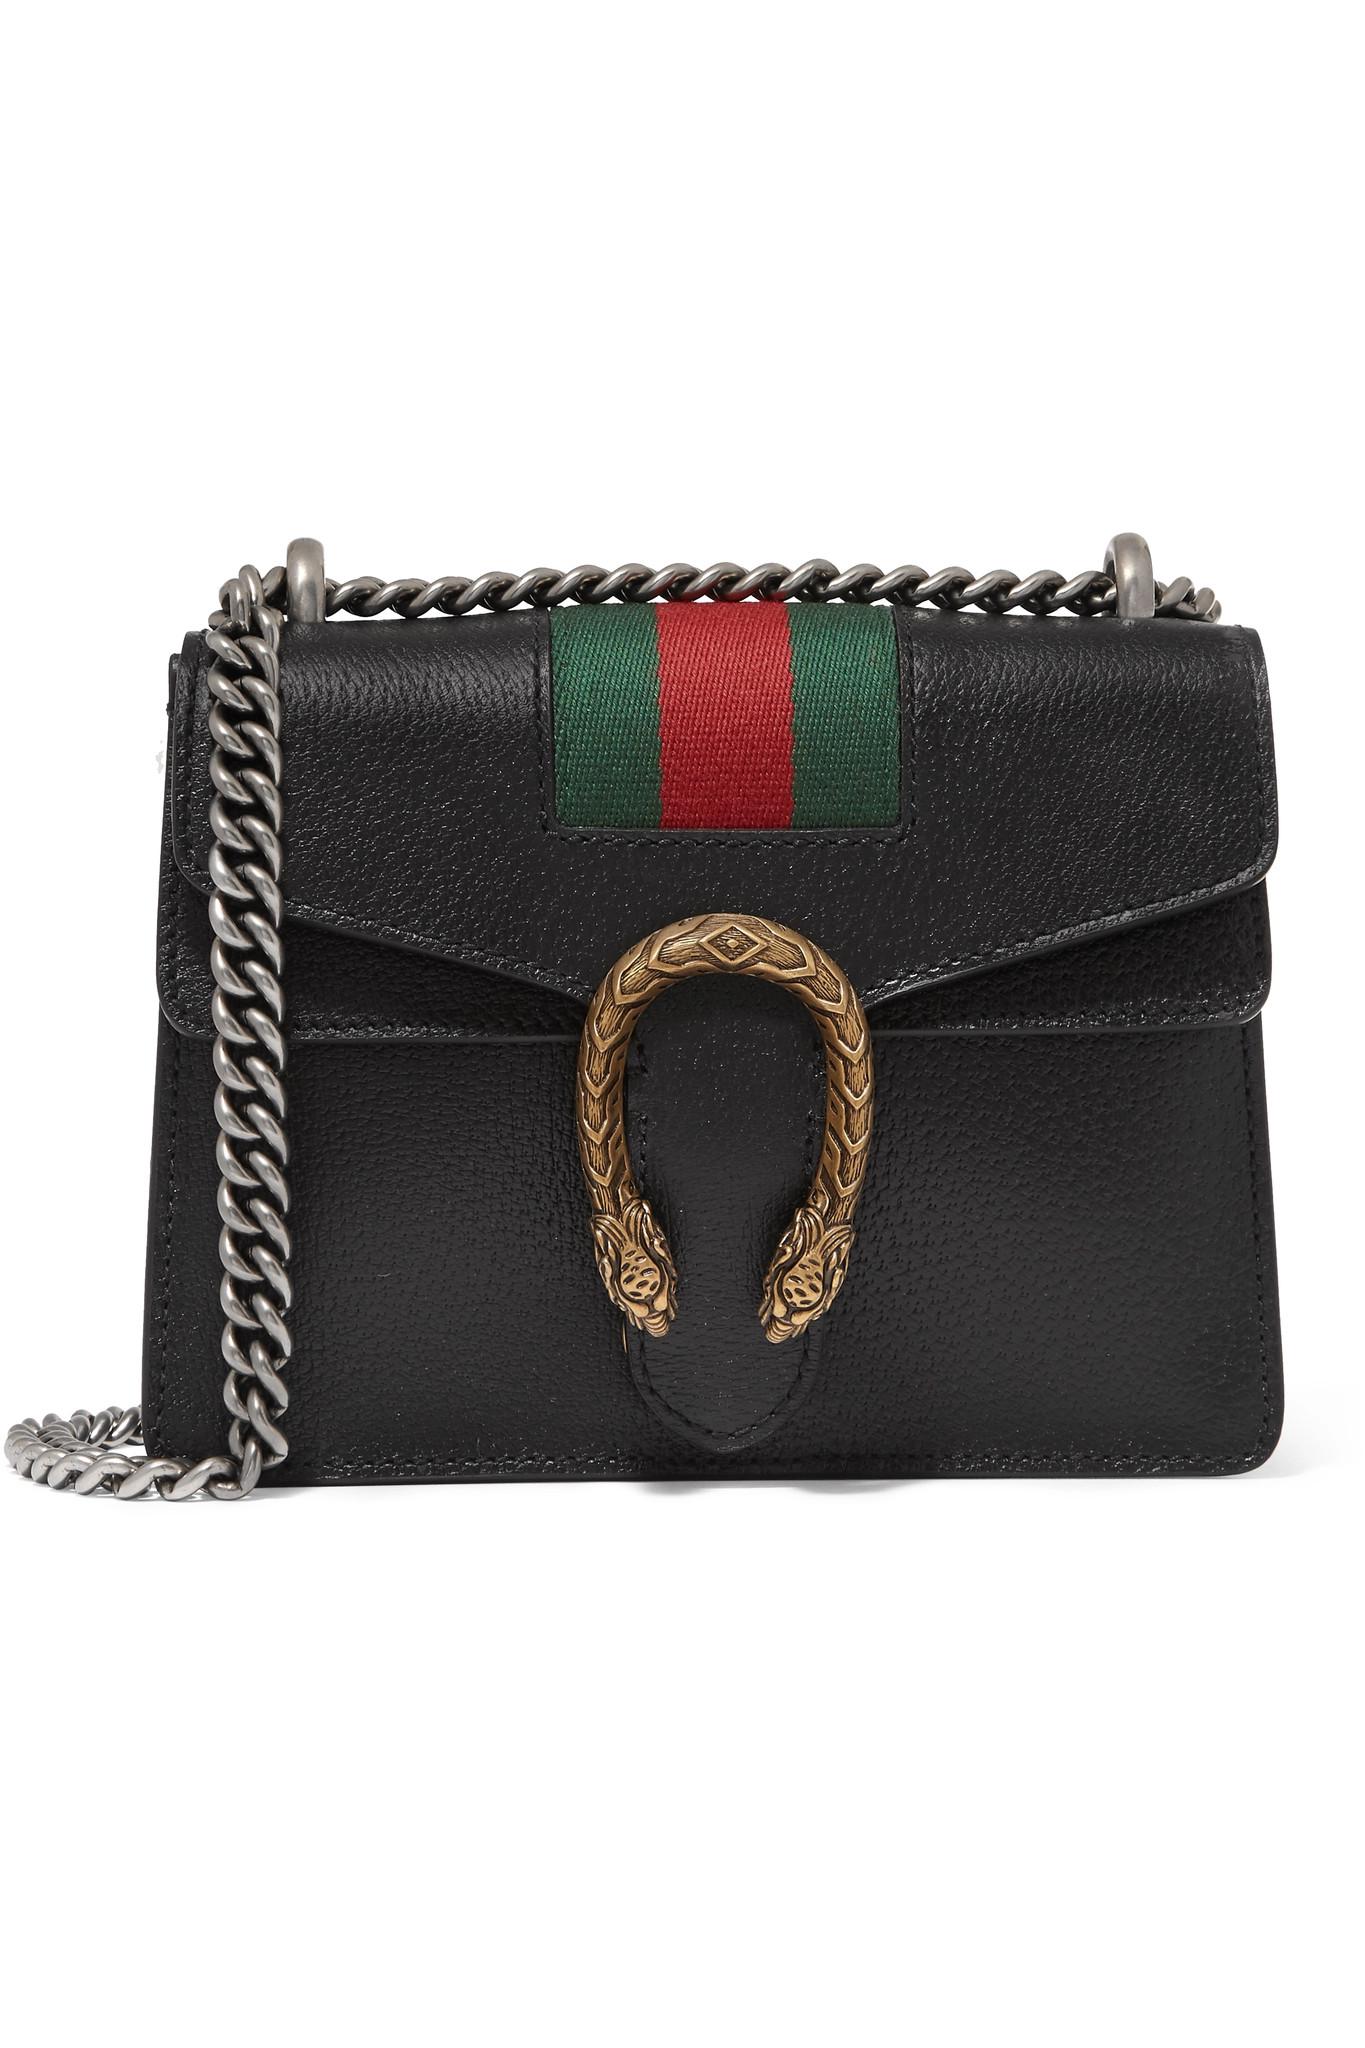 Gucci Dionysus Mini Textured-leather Shoulder Bag in Black - Lyst